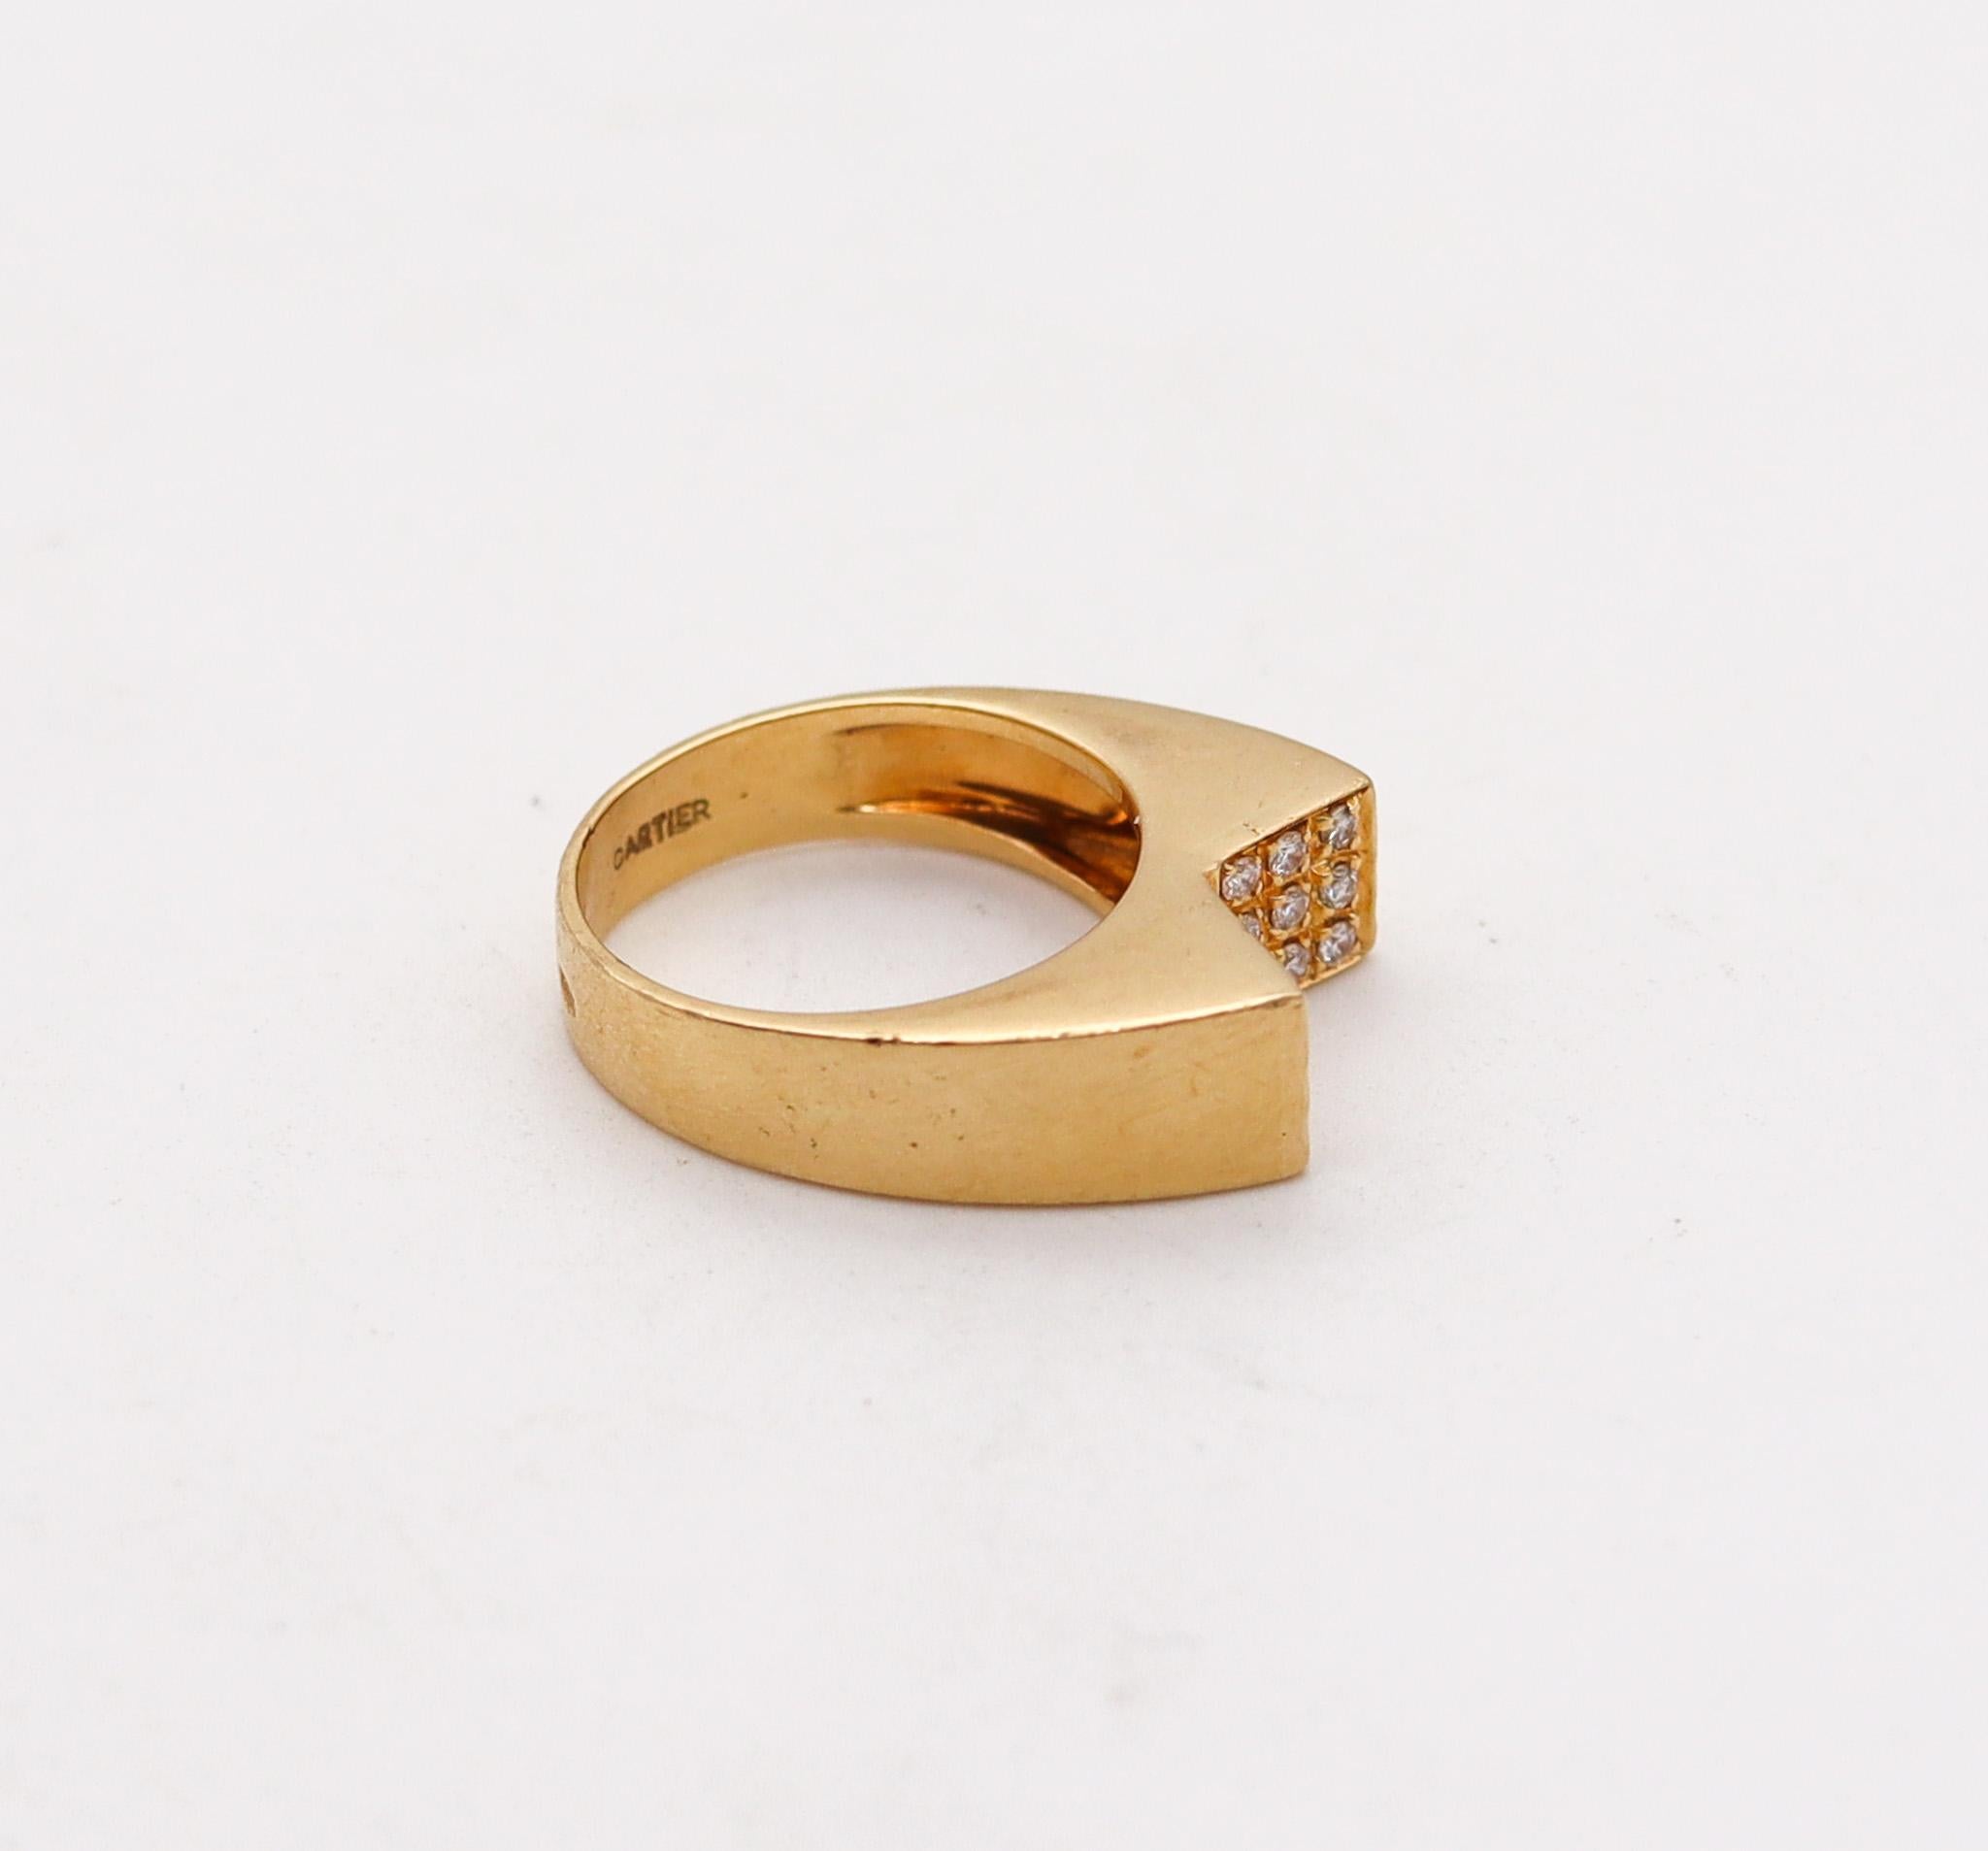 Women's Cartier 1970 Geometric Modernist Ring in 18 Karat Yellow Gold with Diamonds